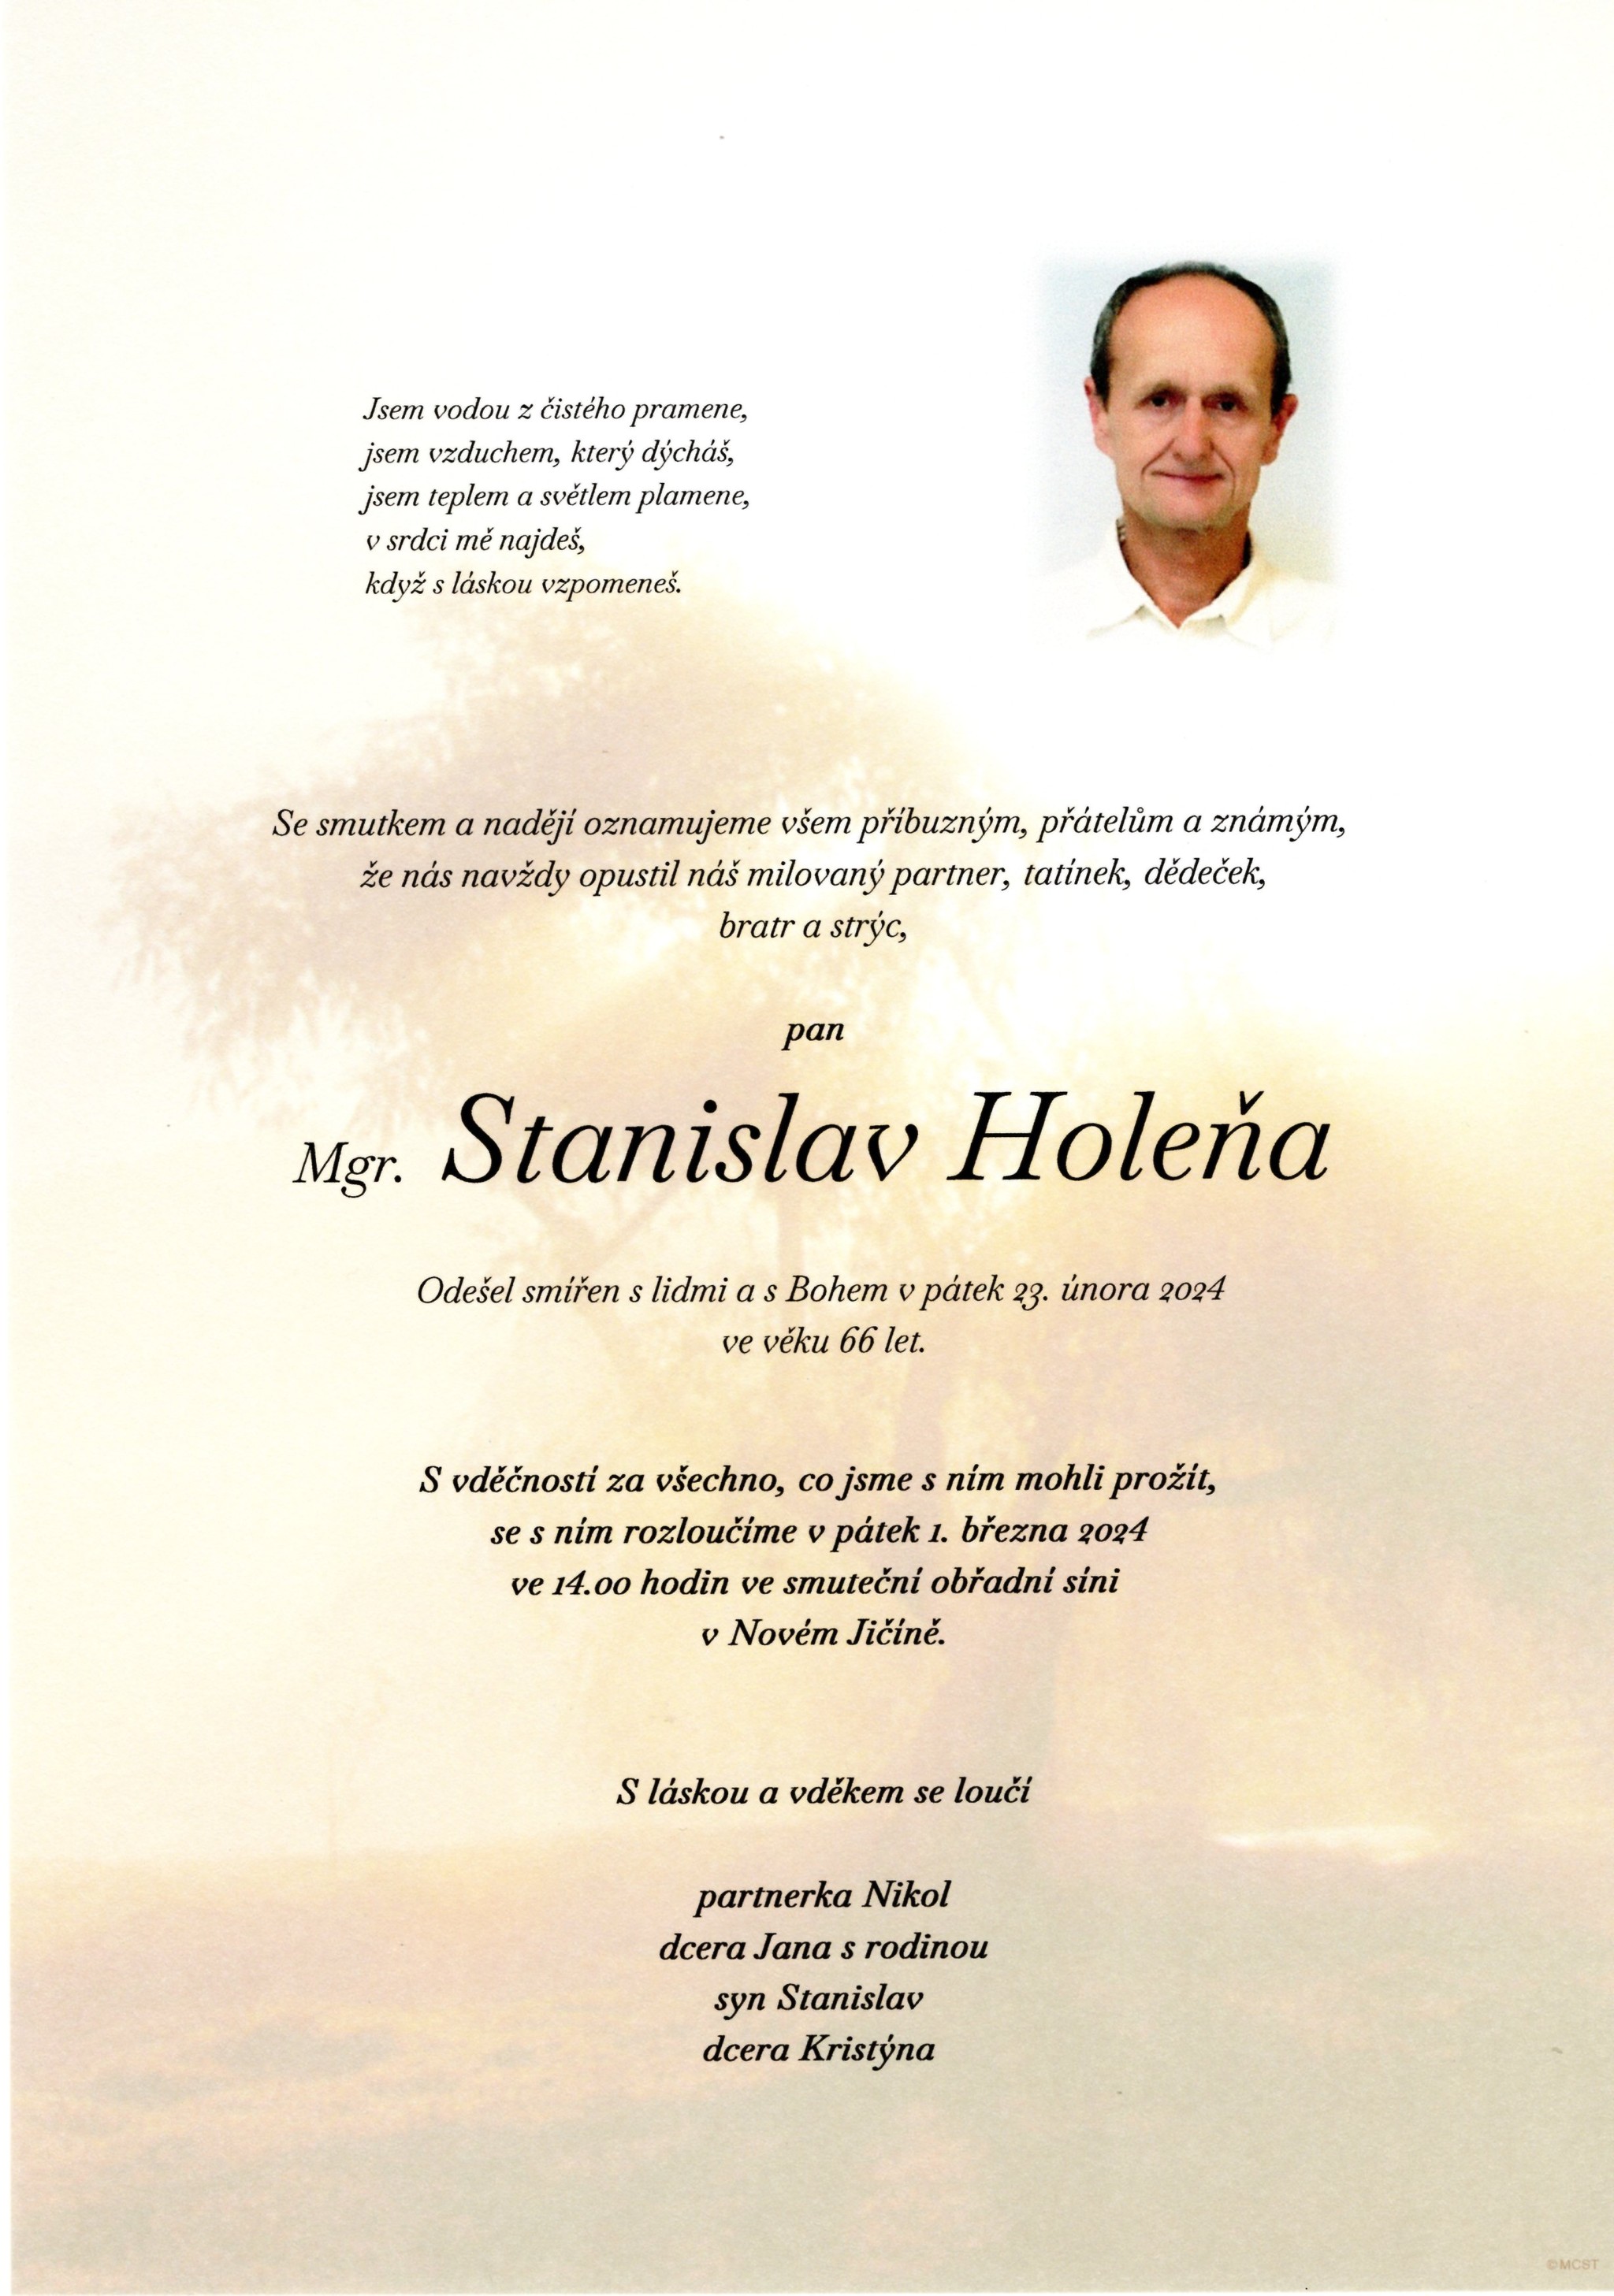 Mgr. Stanislav Holeňa